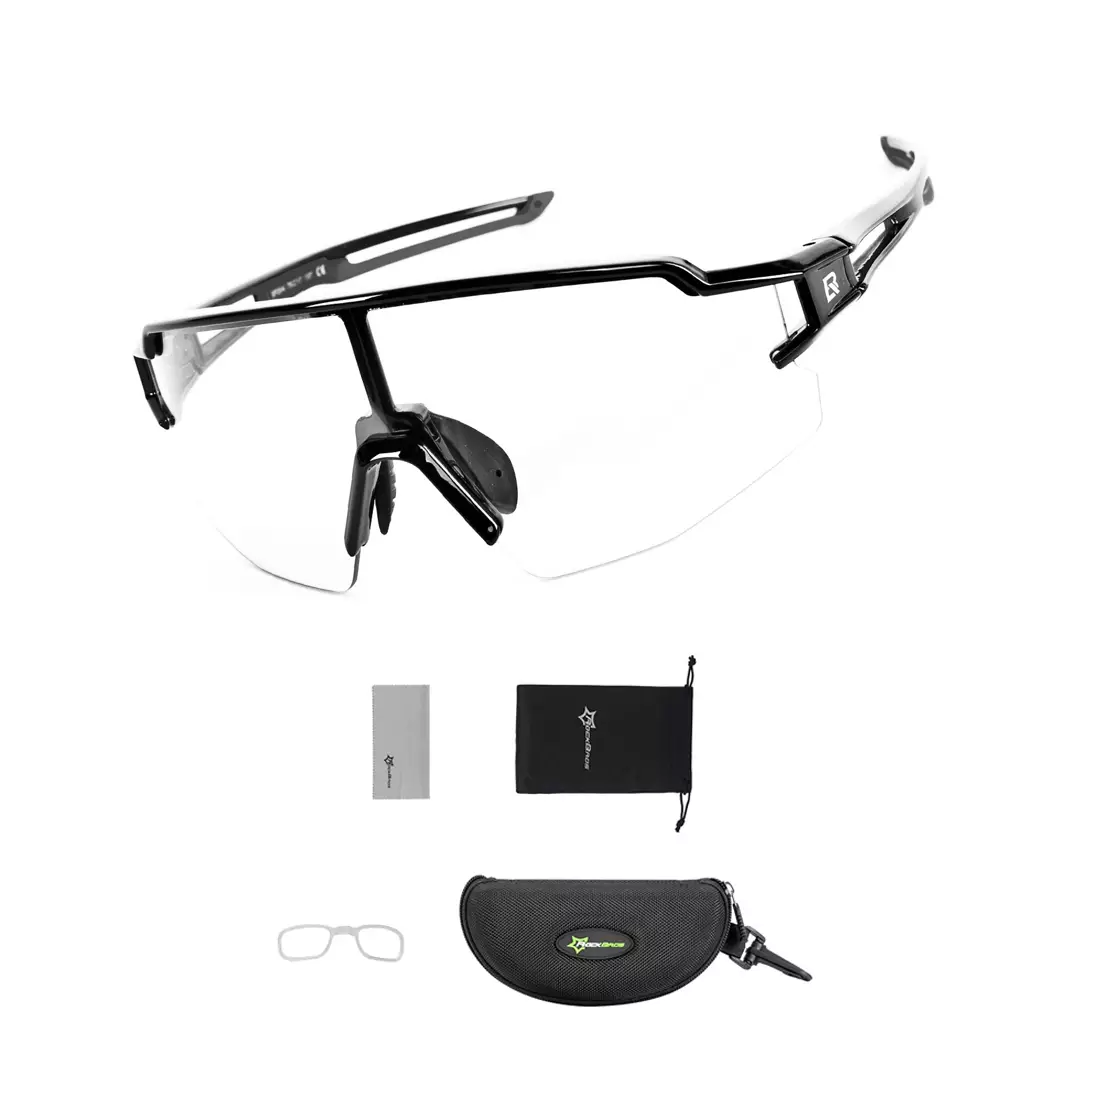 Rockbros 10175 sports glasses with photochrome + correction insert black